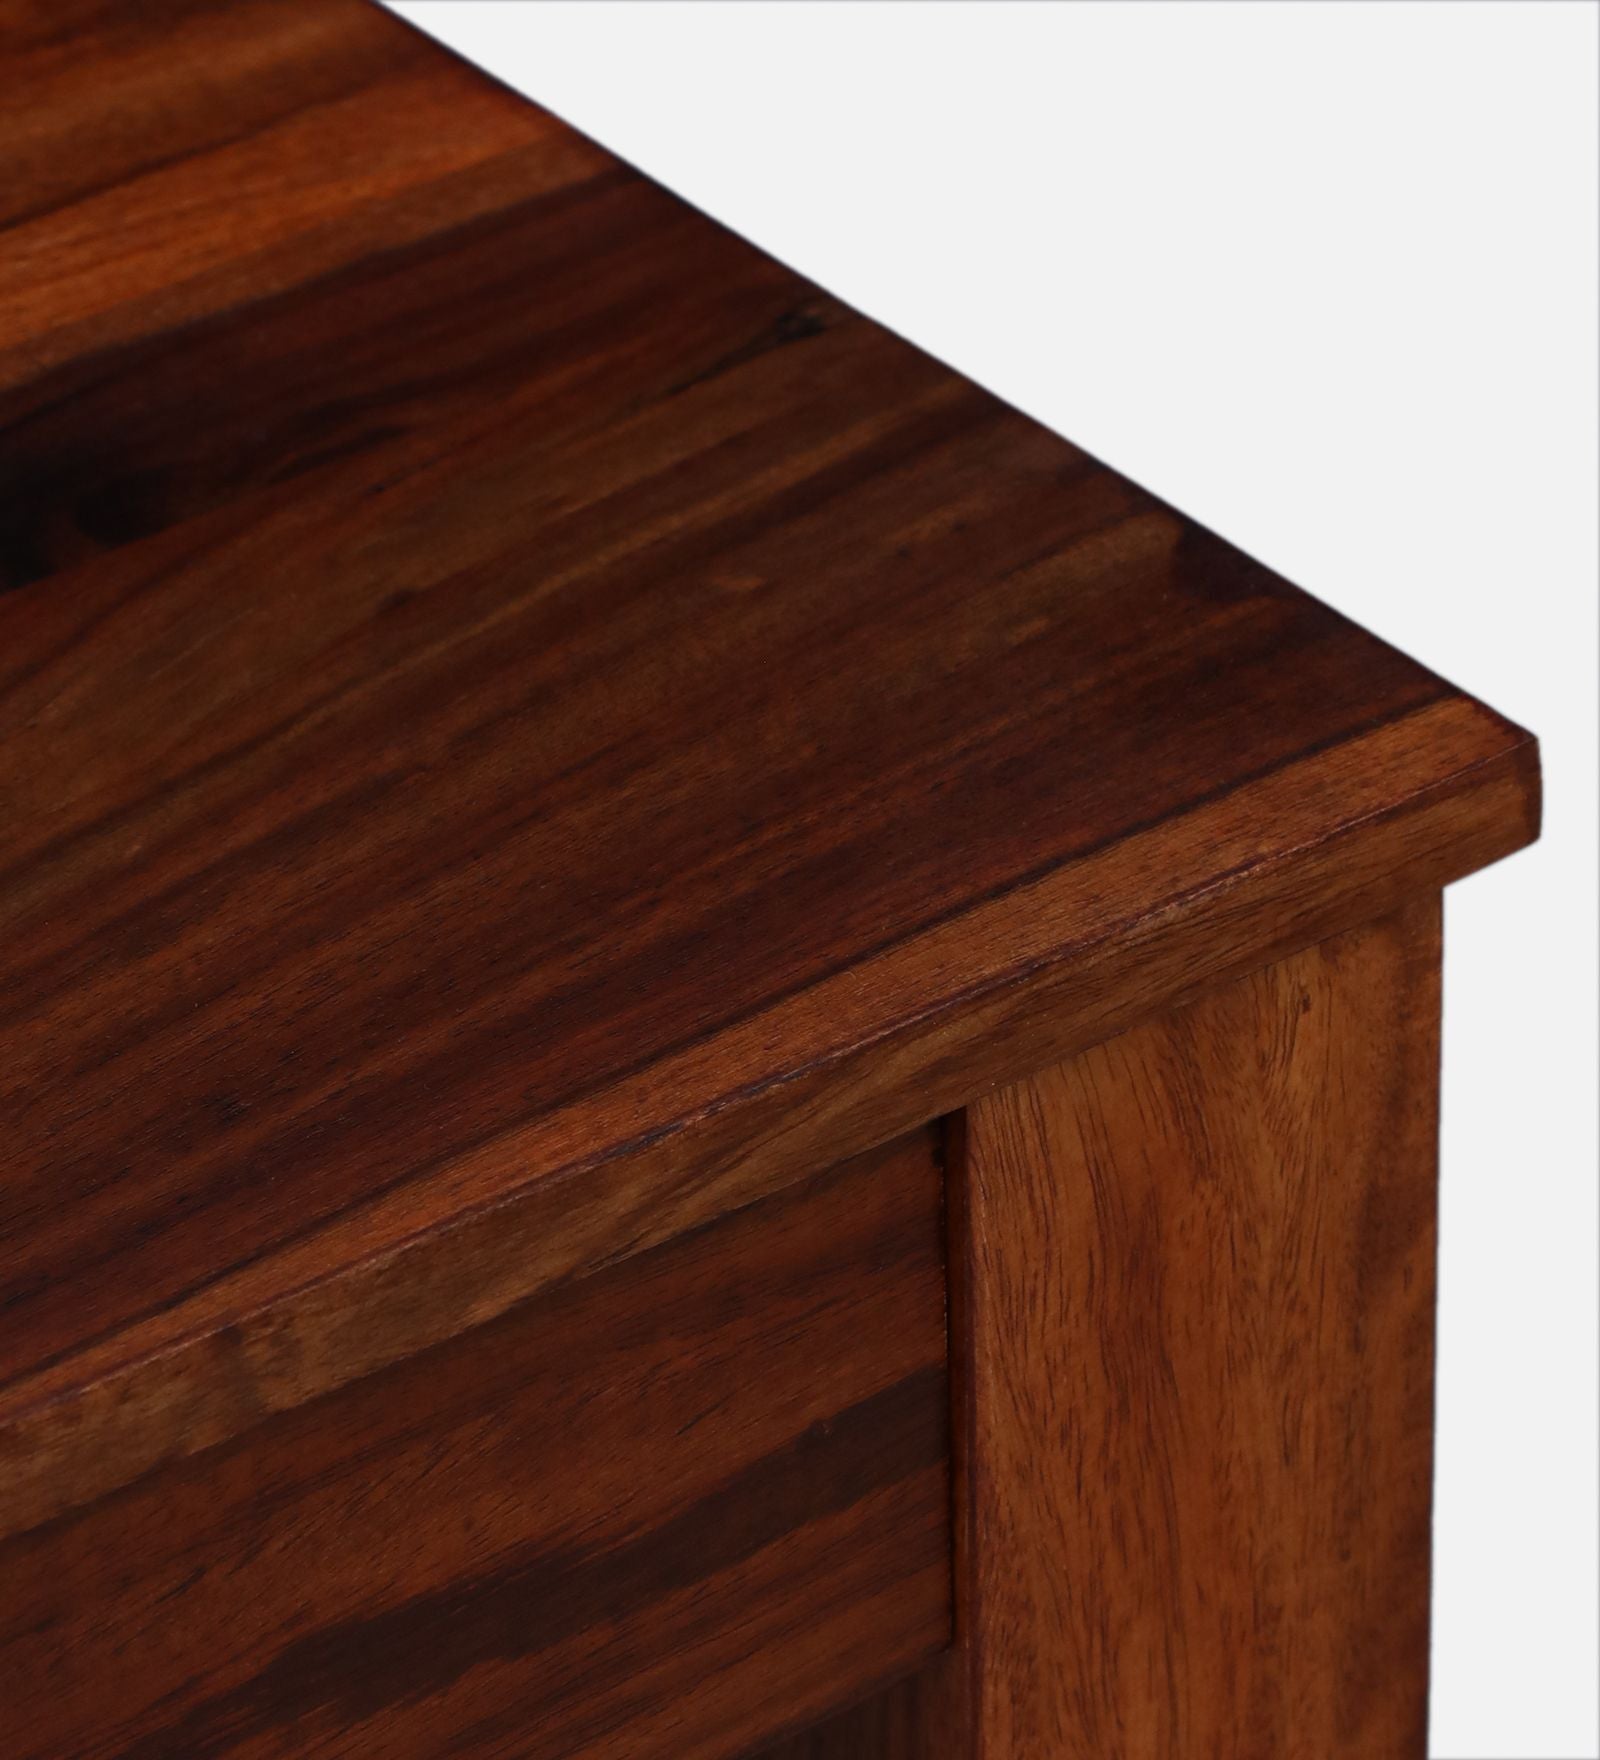 Penza Solid Wood 4 Seater Dining Table In Honey Oak Finish By Rajwada - Rajwada Furnish